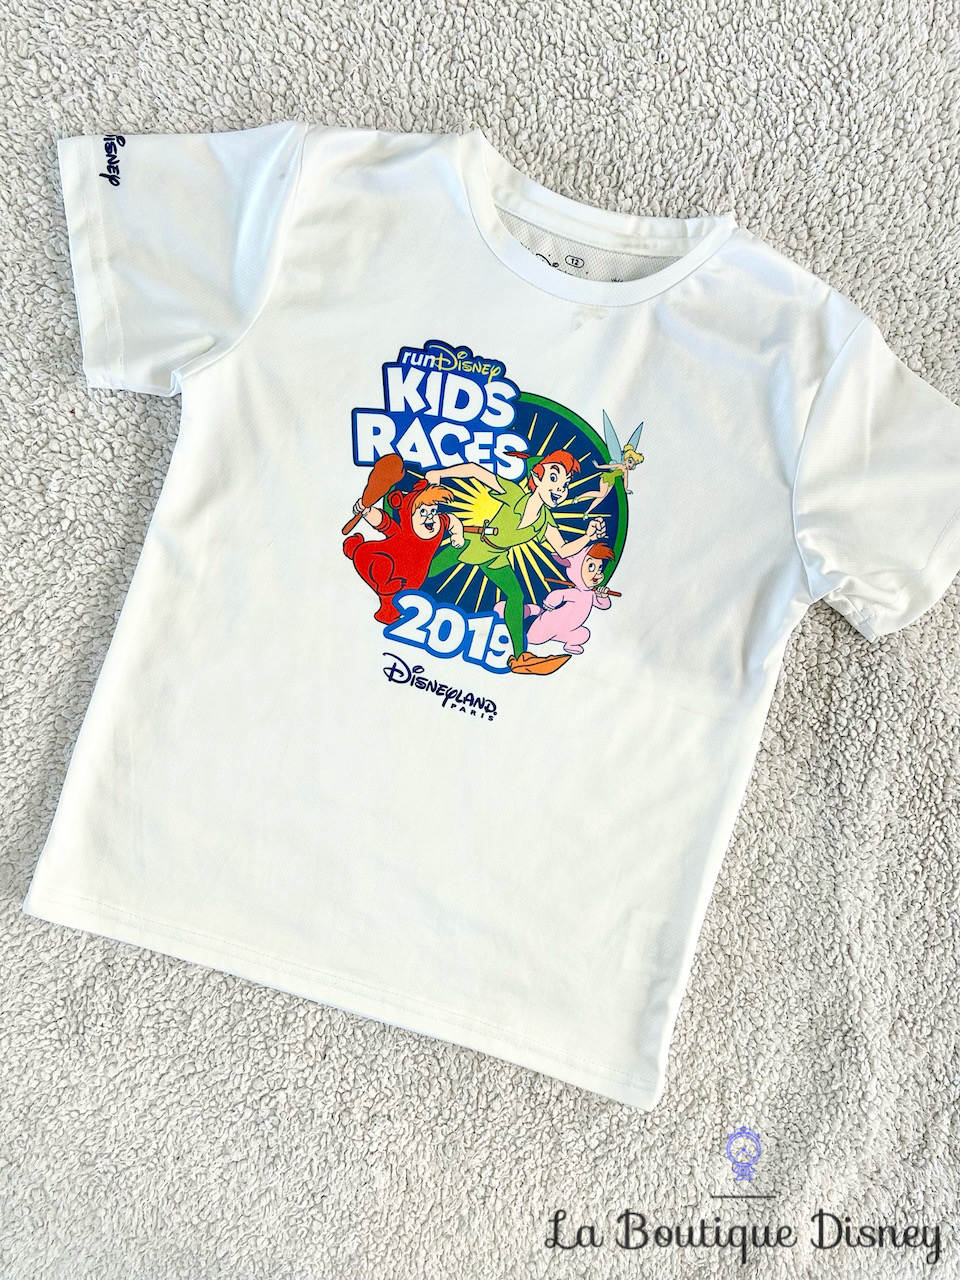 tee-shirt-run-kids-races-disney-2019-disneyland-paris-sport-course-enfants-perdus-peter-pan-1